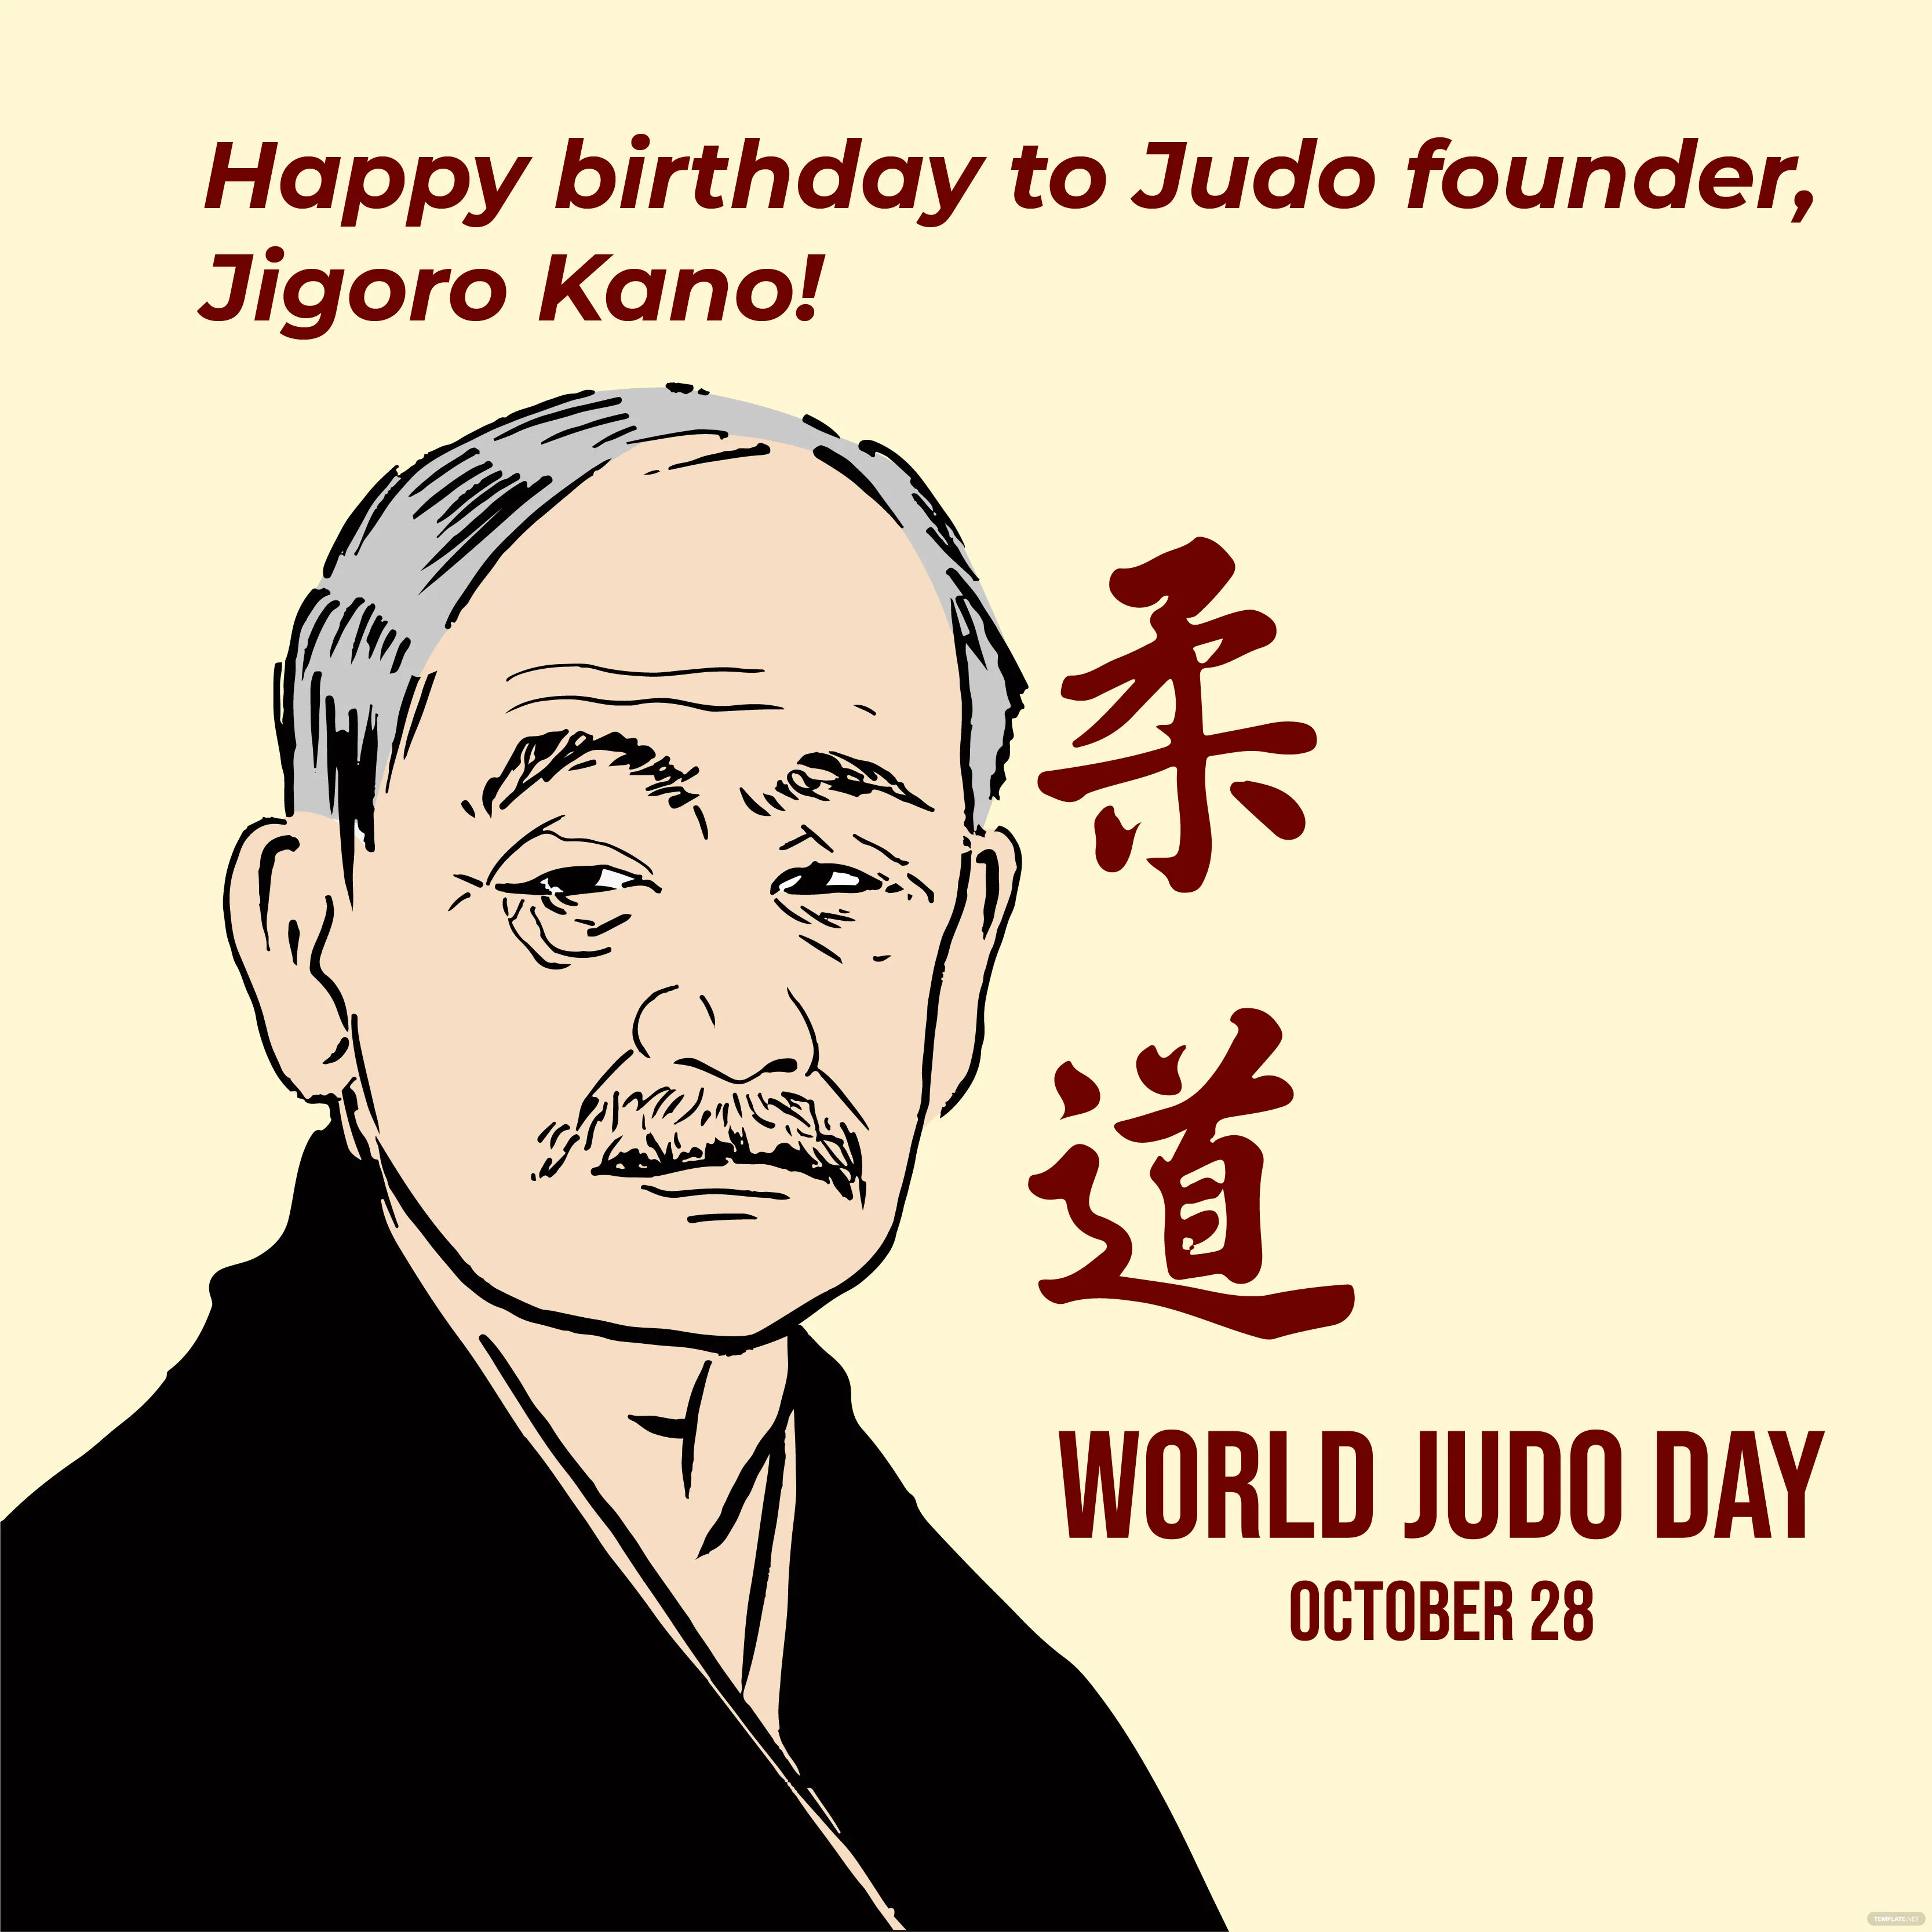 world judo day whatsapp post ideas examples